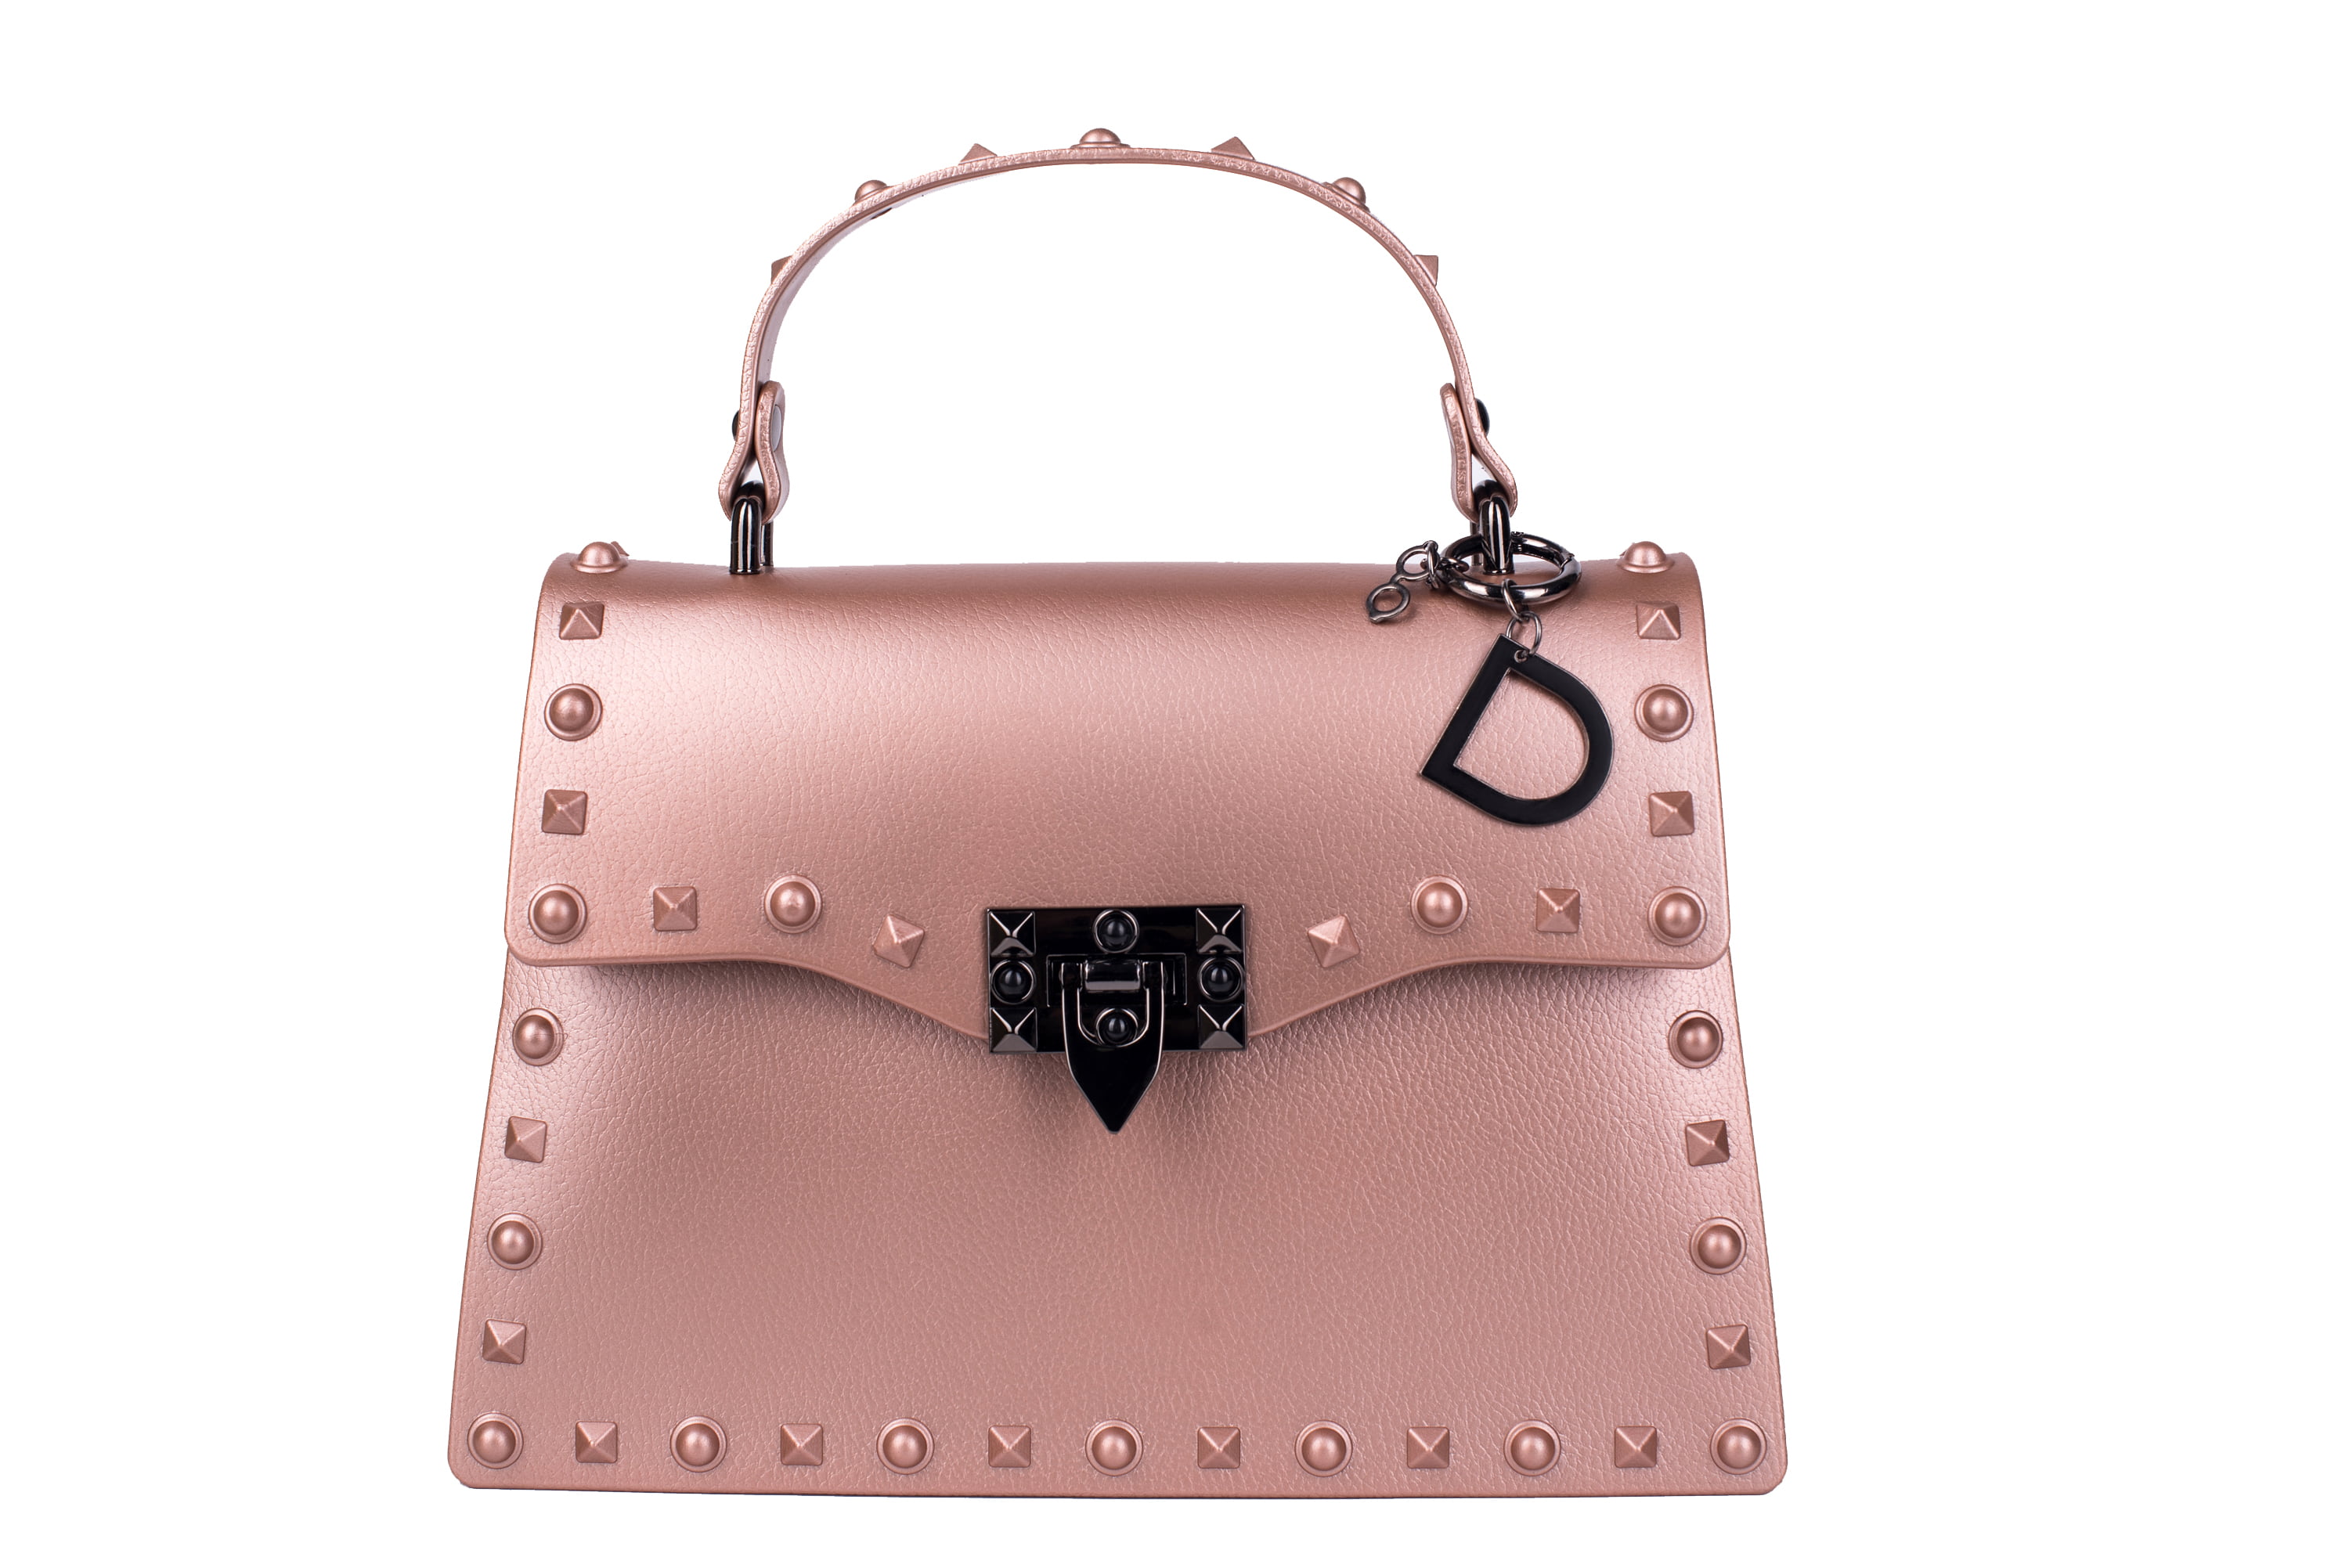 5A Designer Bag Luxury Purse France Brand Handbag Women Crossbody Bag  Cosmetic Shoulder Bags Tote Messager Wallet By Shoebrand W140 06 From  Shoebrand, $51.38 | DHgate.Com